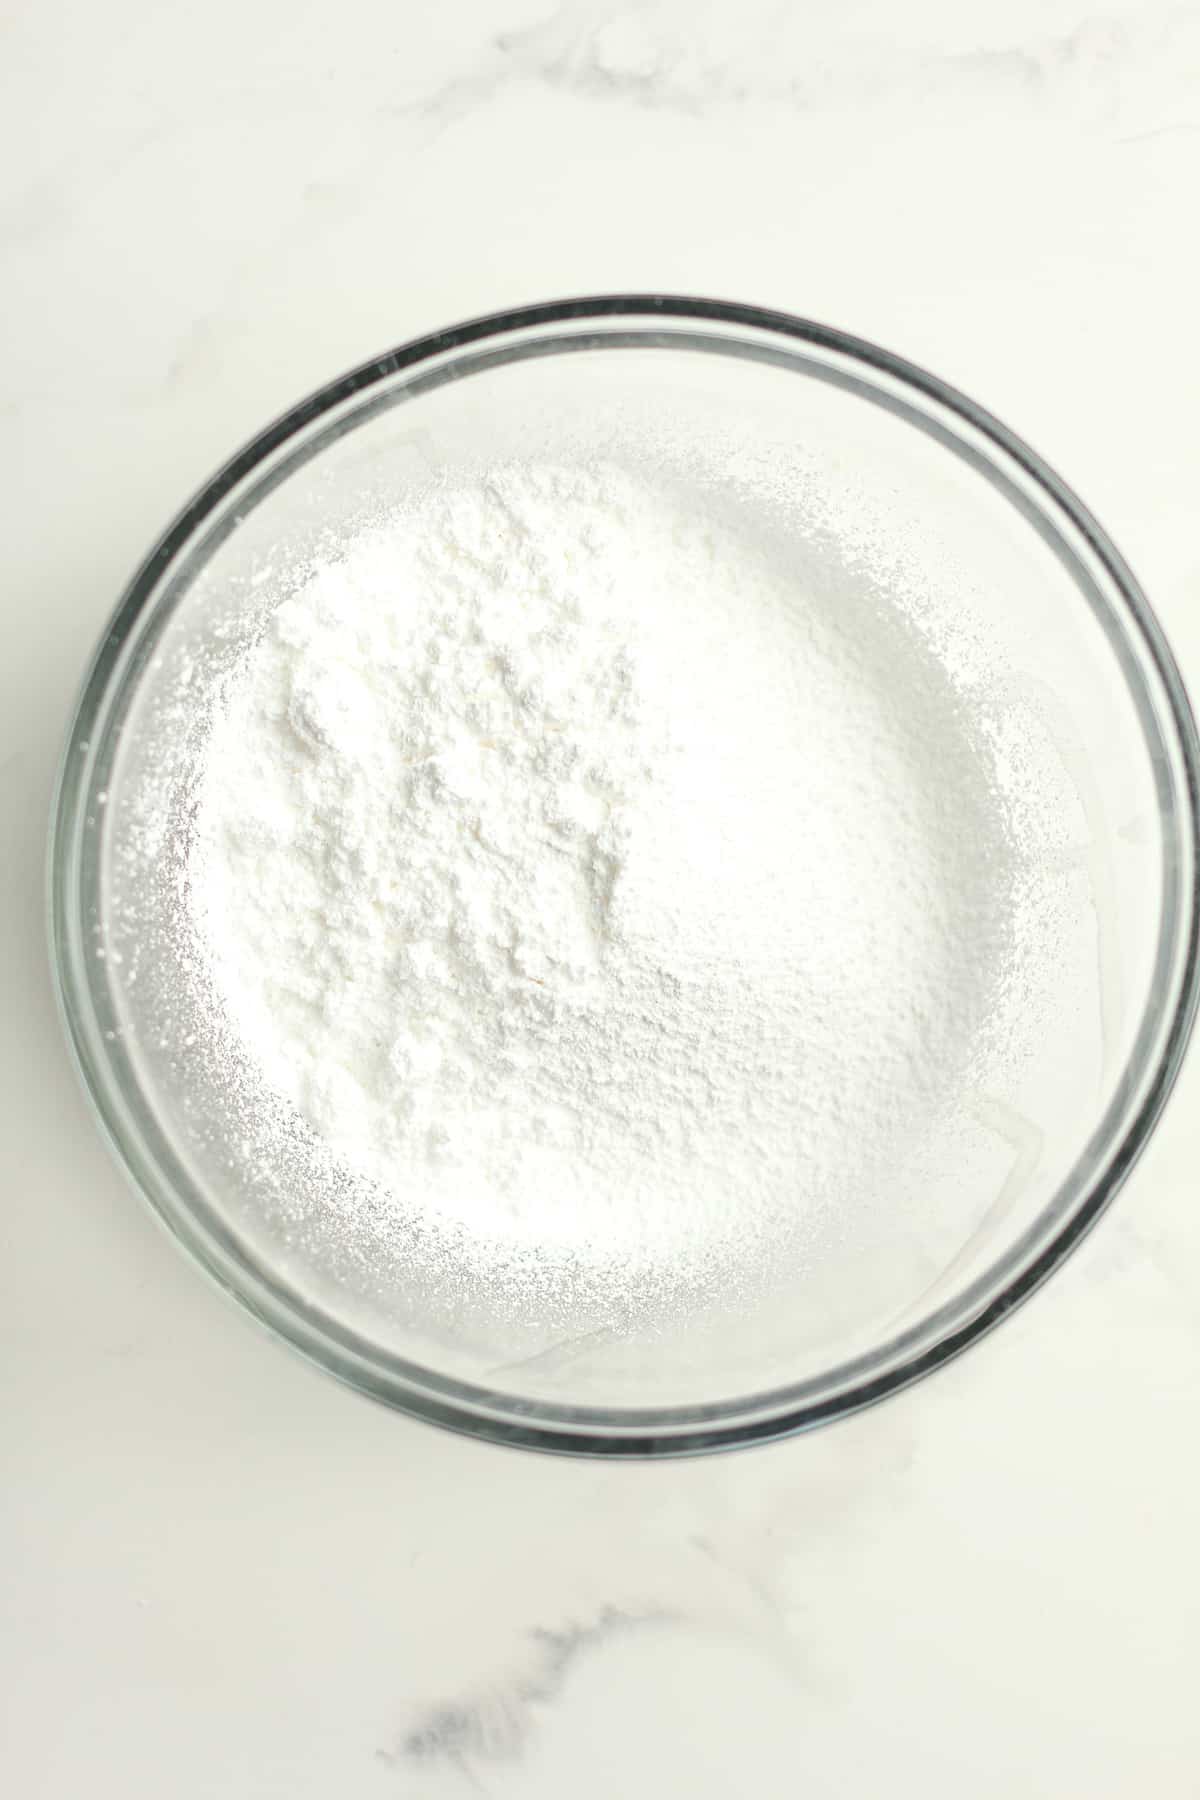 A bowl of sifted powdered sugar.